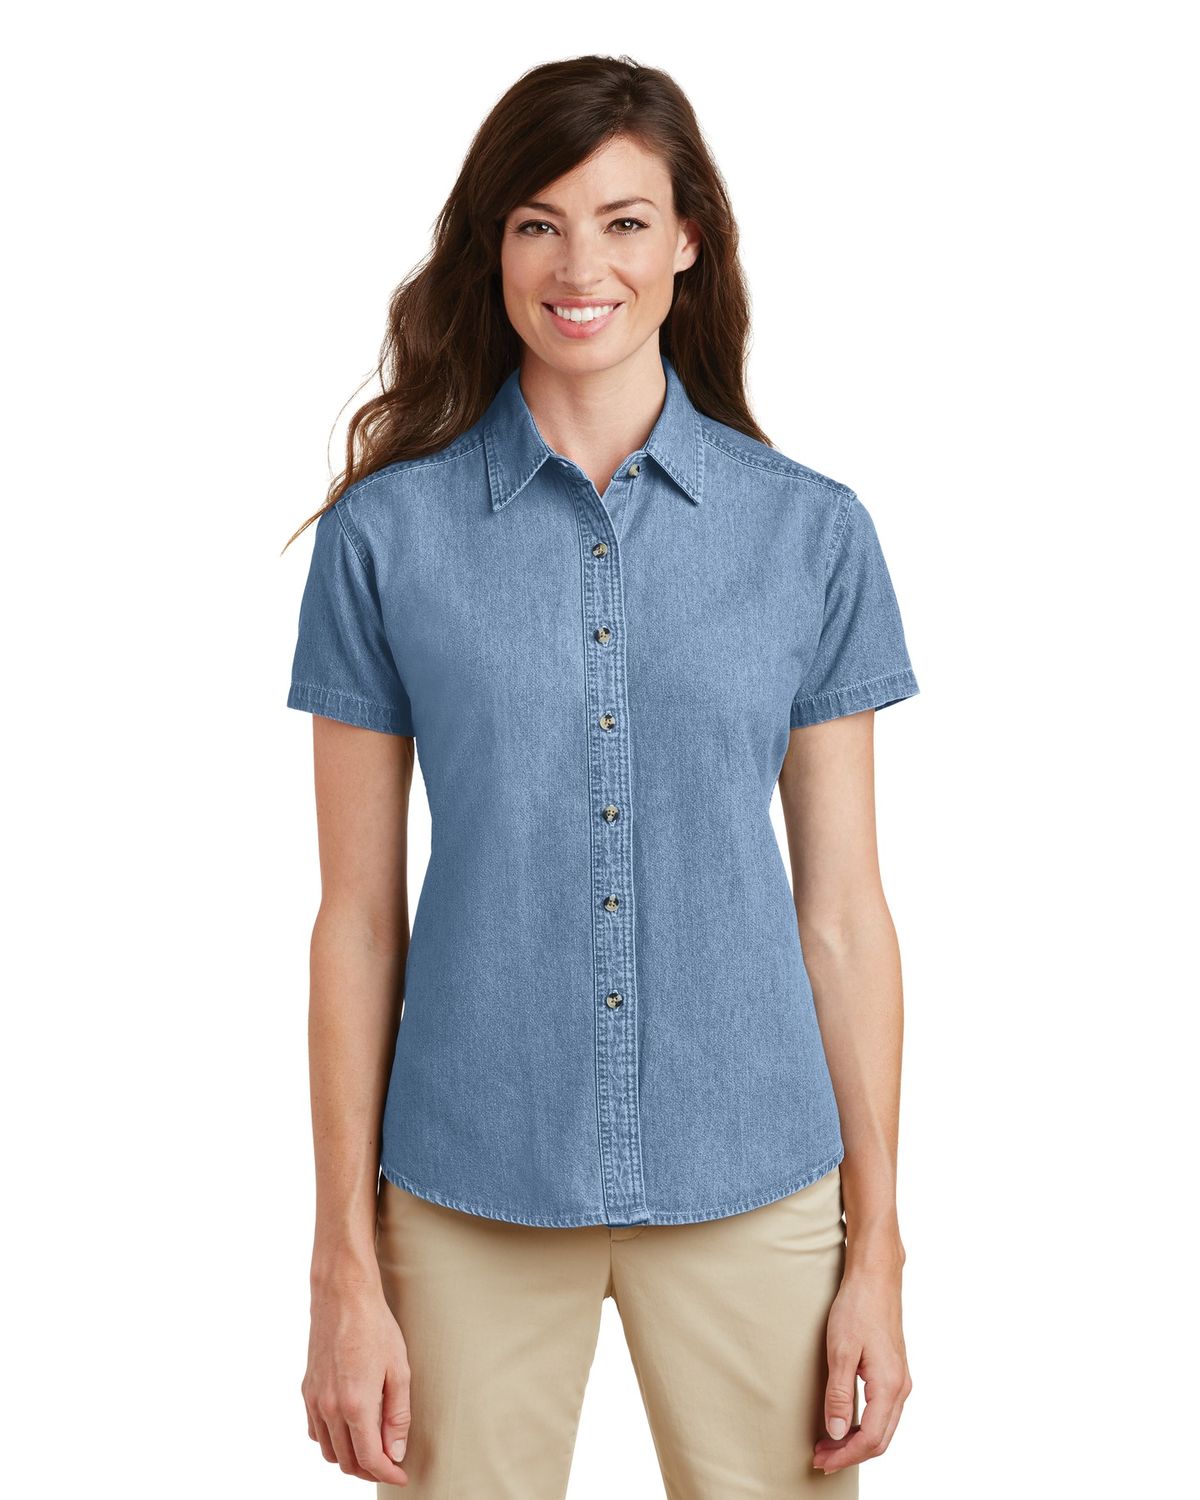 'Port & Company LSP11 Women’s Short Sleeve Value Denim Shirt'